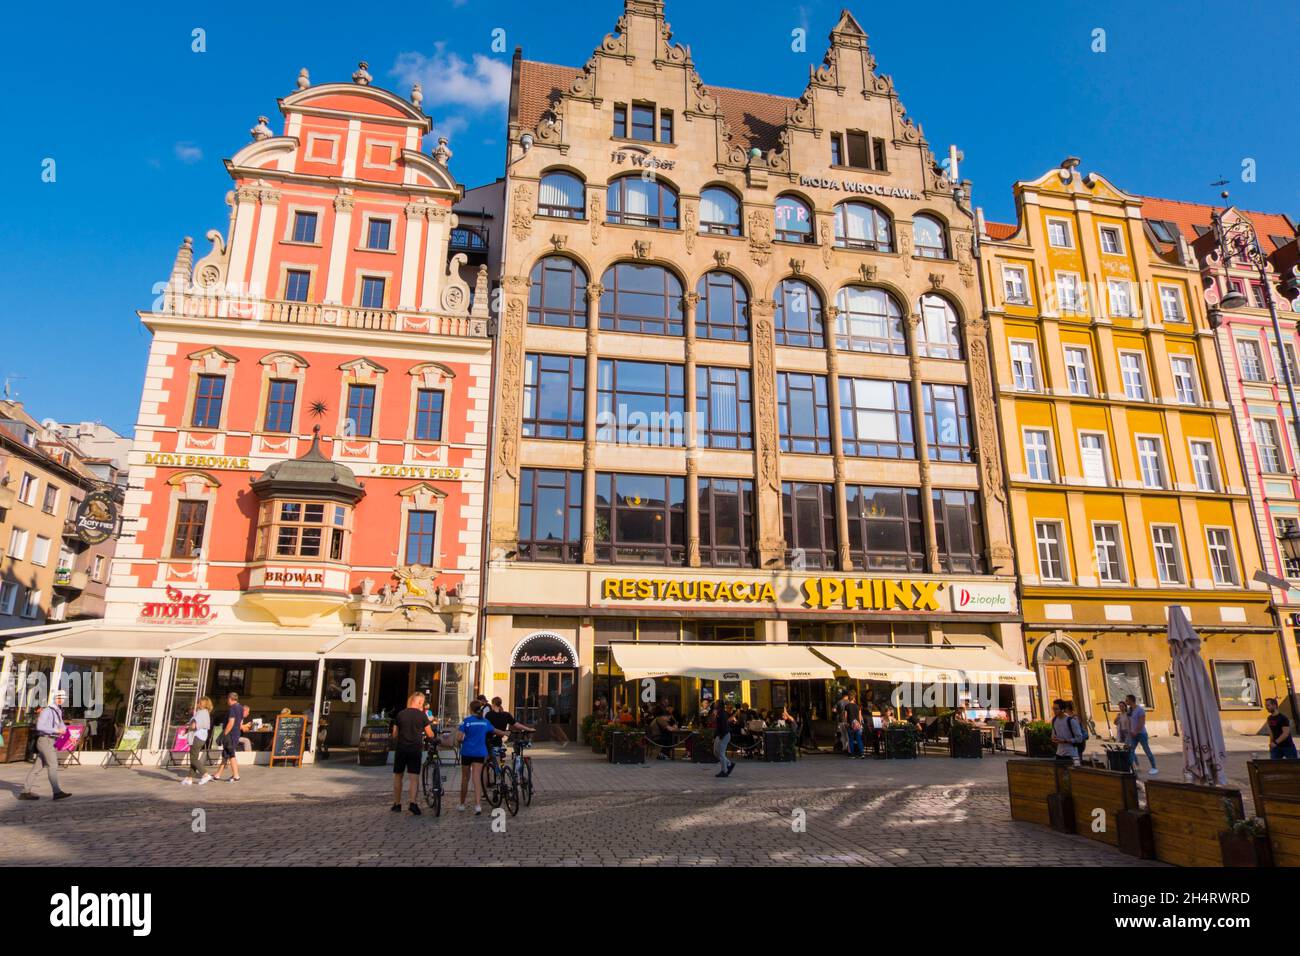 Rynek, piazza del mercato, centro storico, Breslavia, Polonia Foto Stock